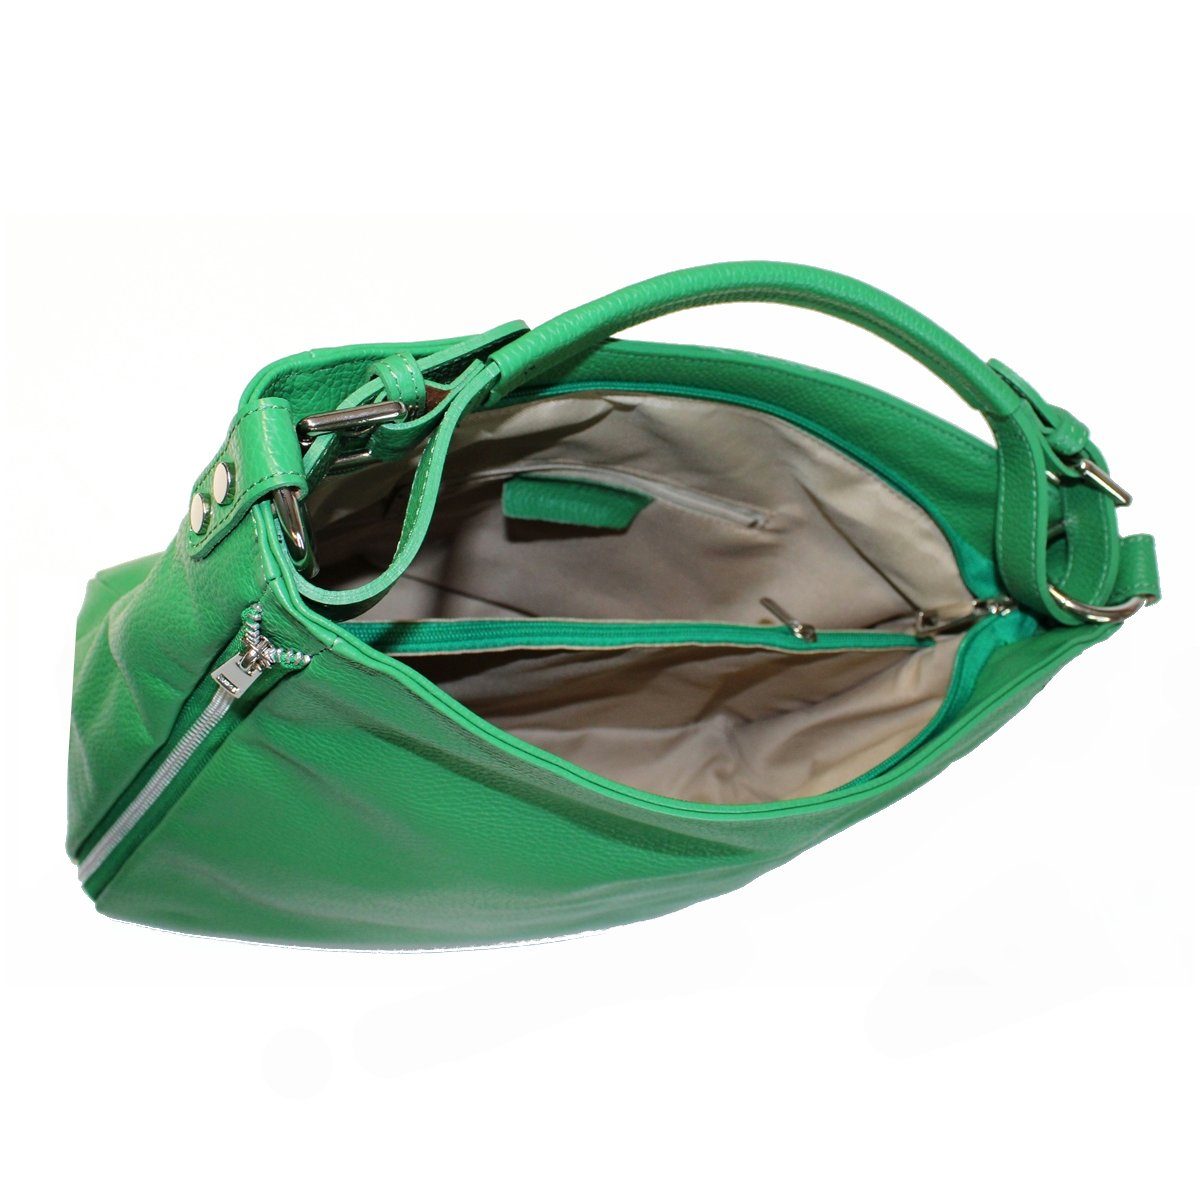 Made Grün fs-bags Italy fs7142, Handtasche in